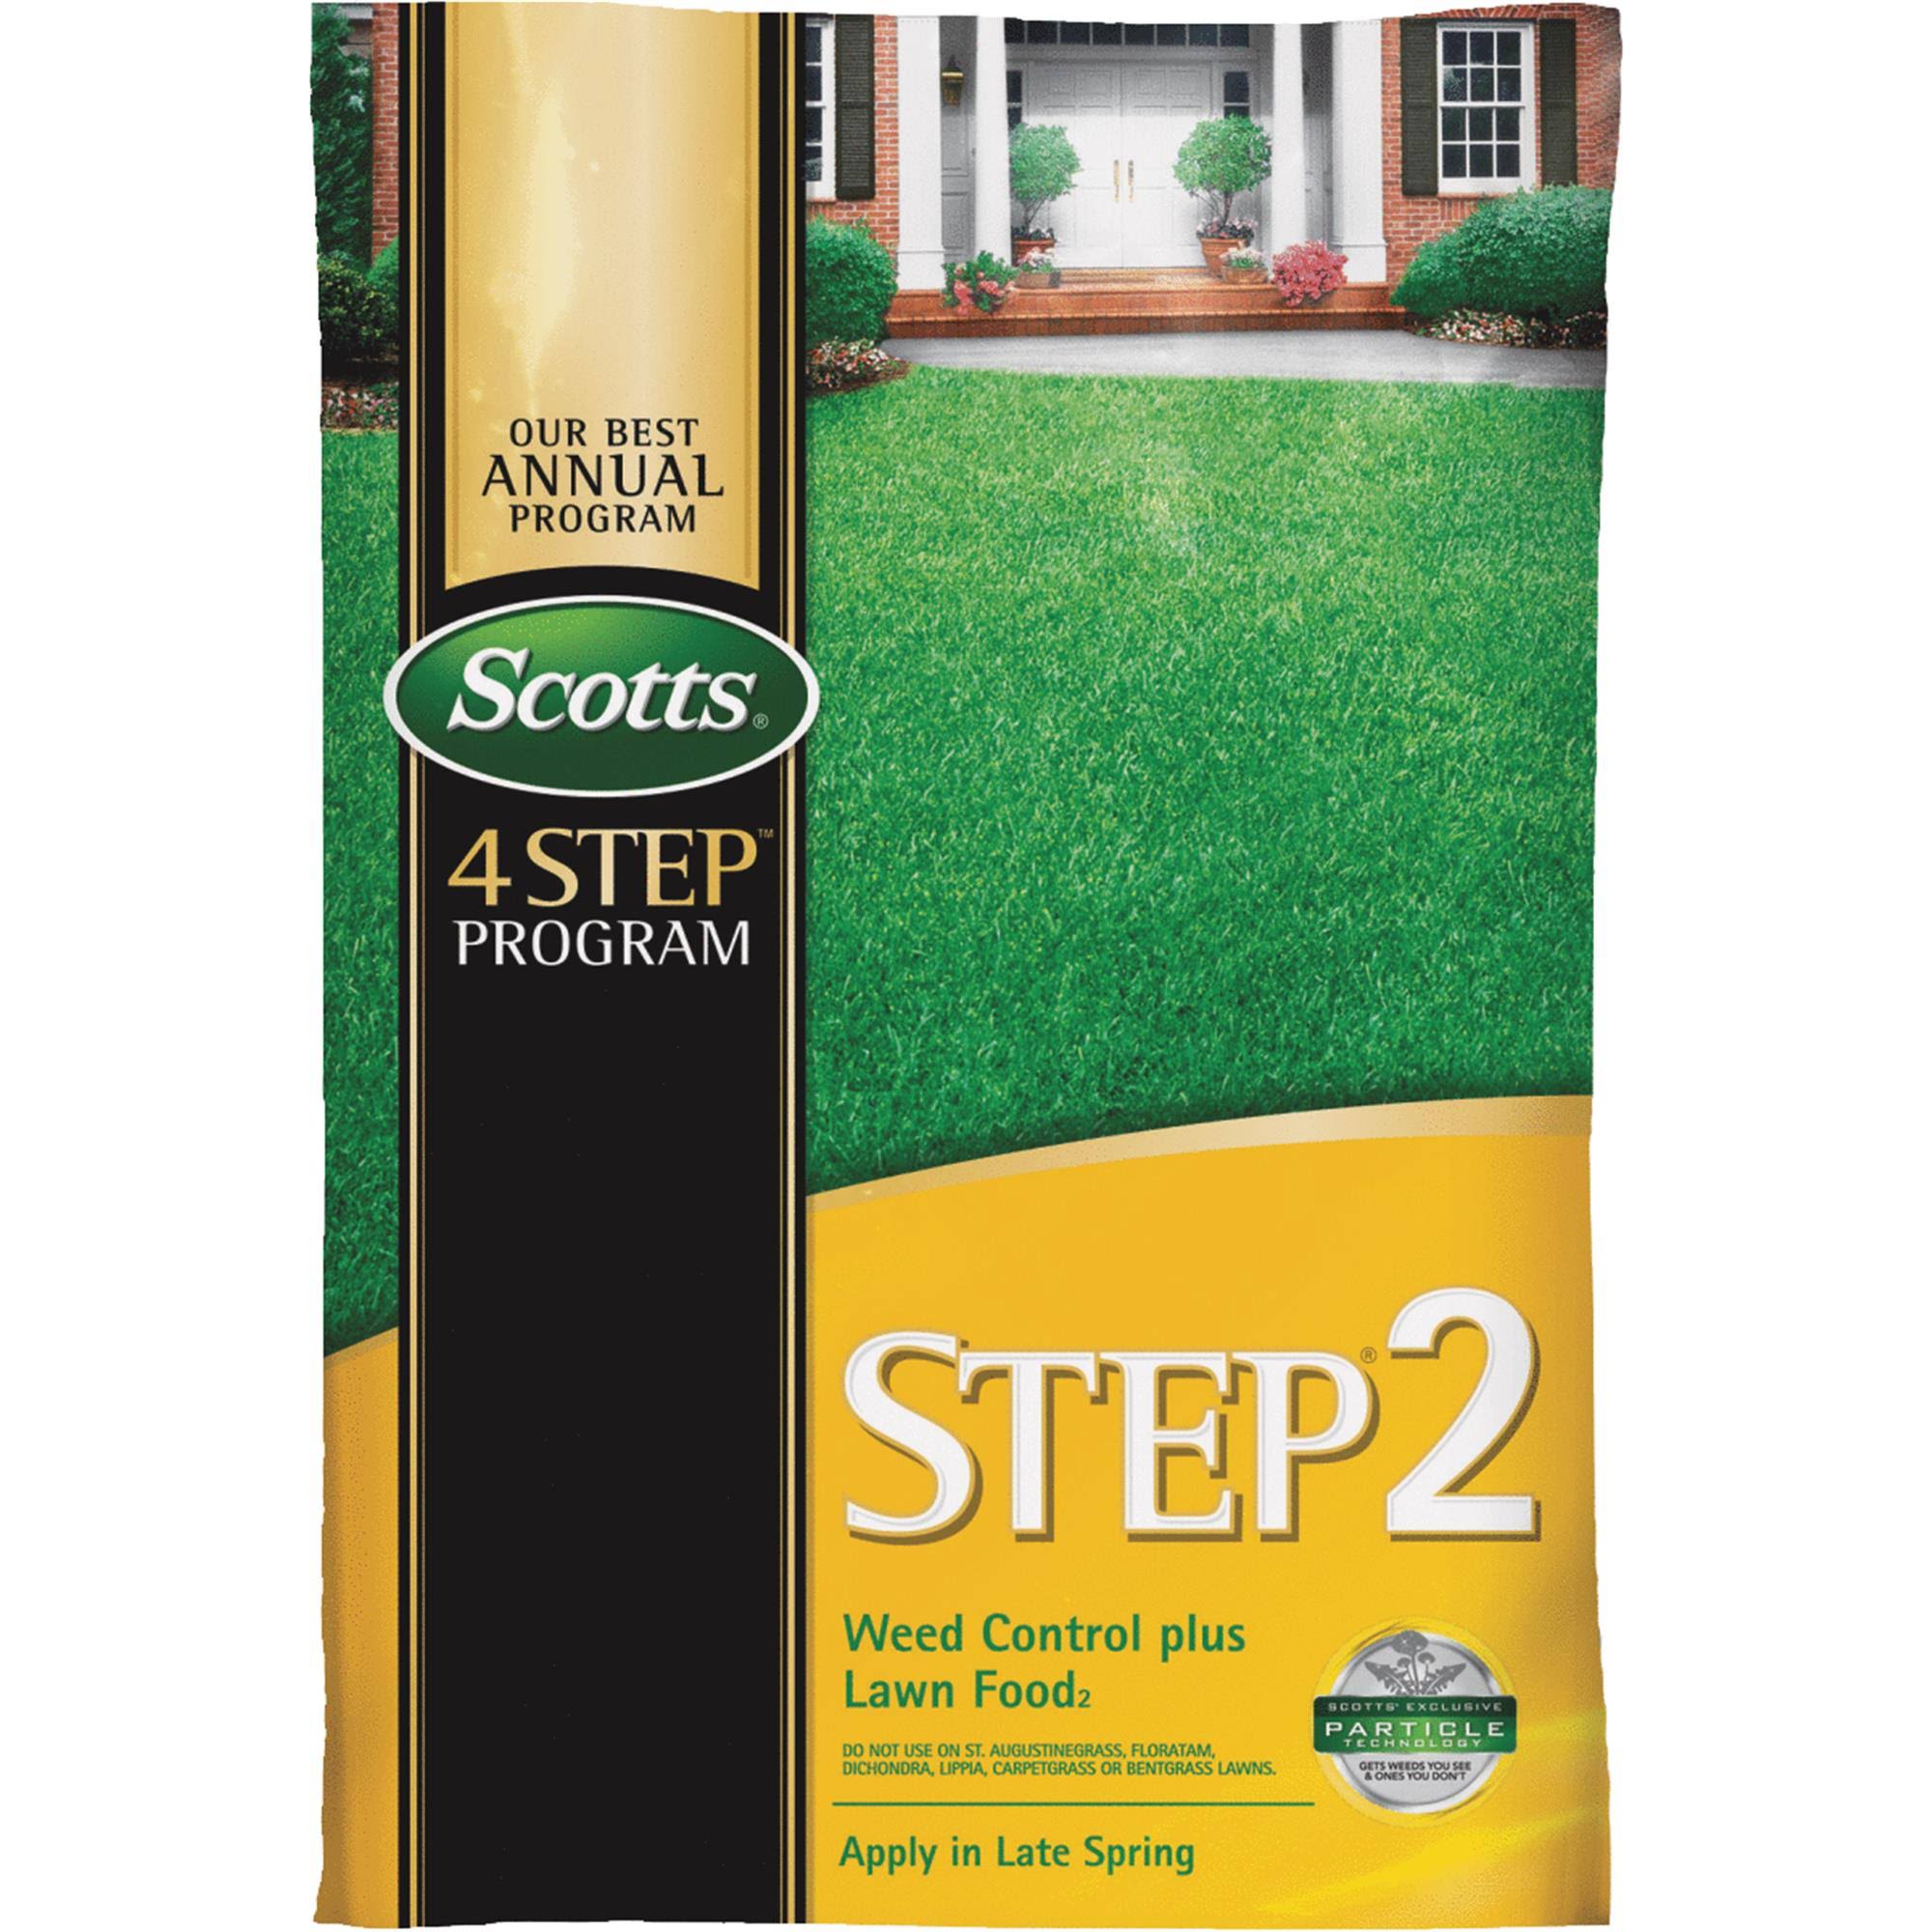 Scotts 4 Step Program Step 2 Lawn Fertilizer With Weed Killer